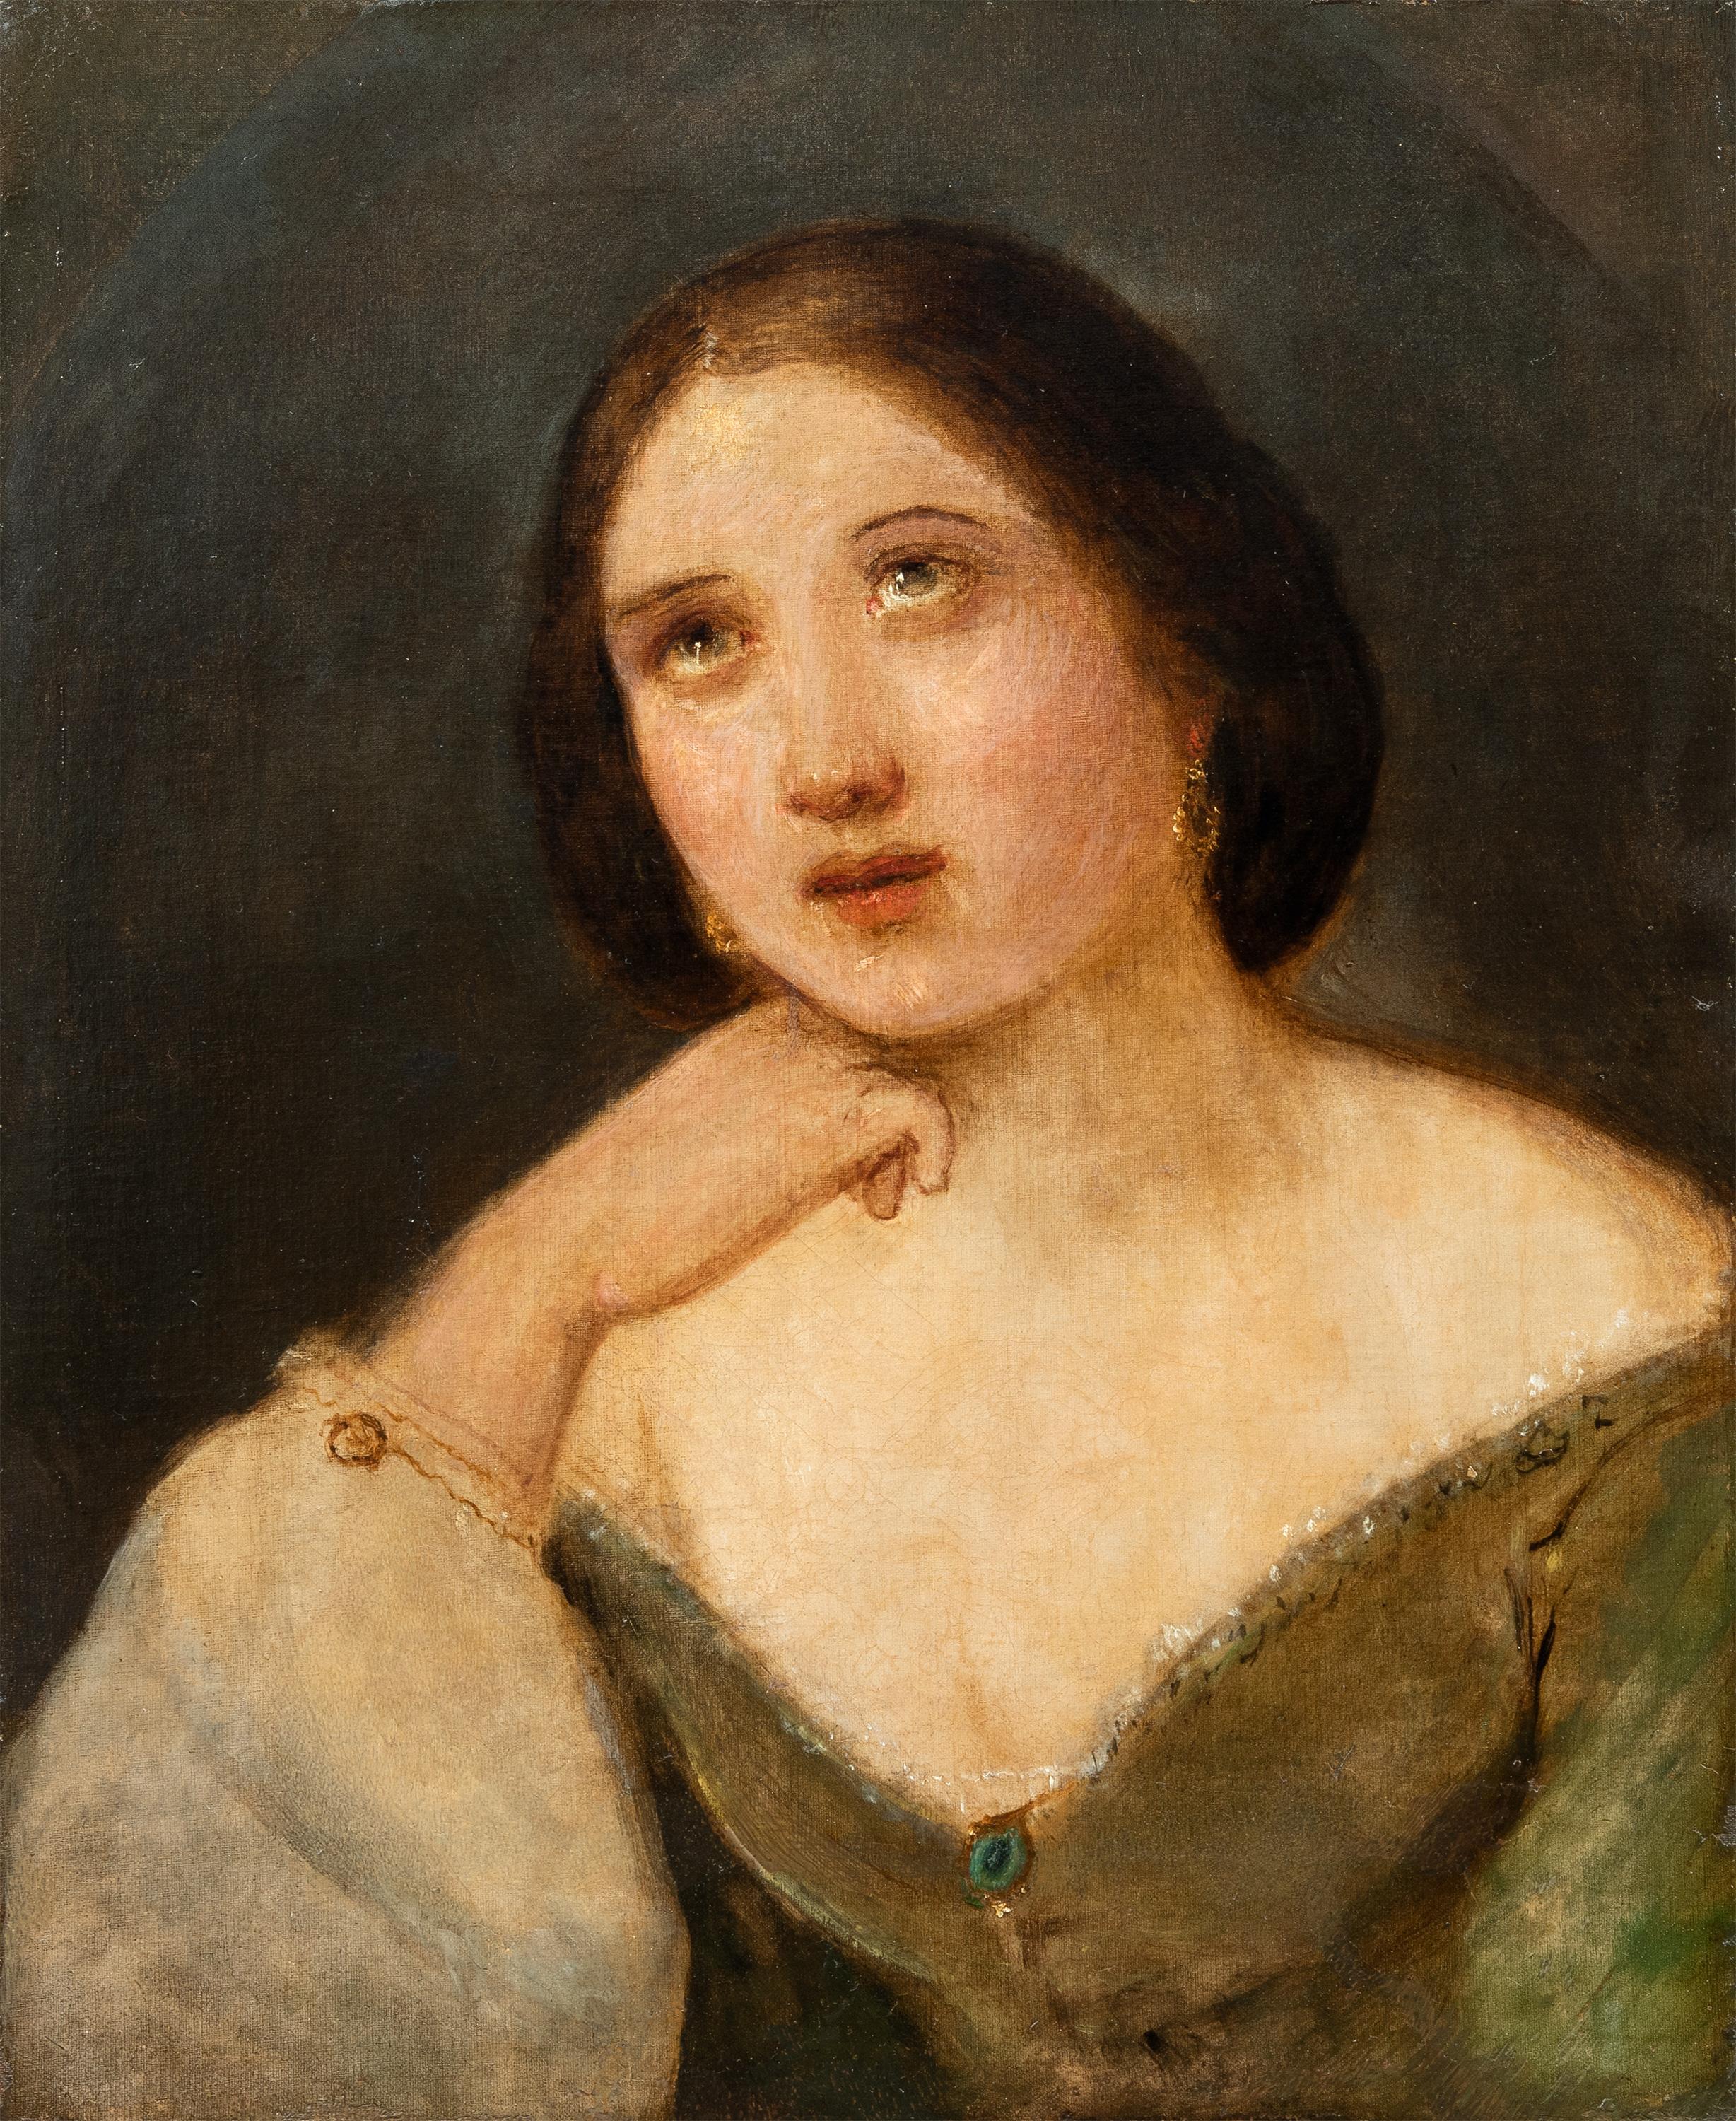 Romantik Italienischer Maler der Romantik - Figurenmalerei des 19. Jahrhunderts - Mädchenporträt 